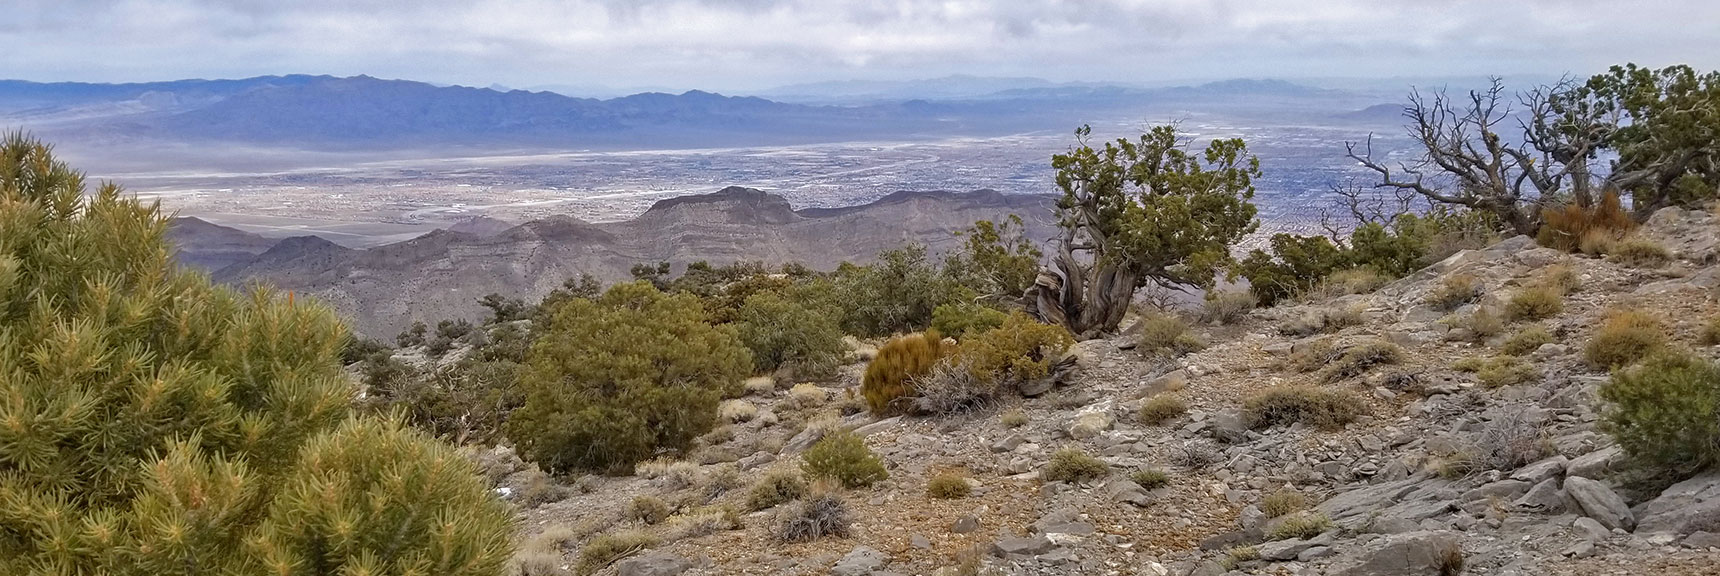 Damsel Peak Summit in Calico Basin, Nevada 005